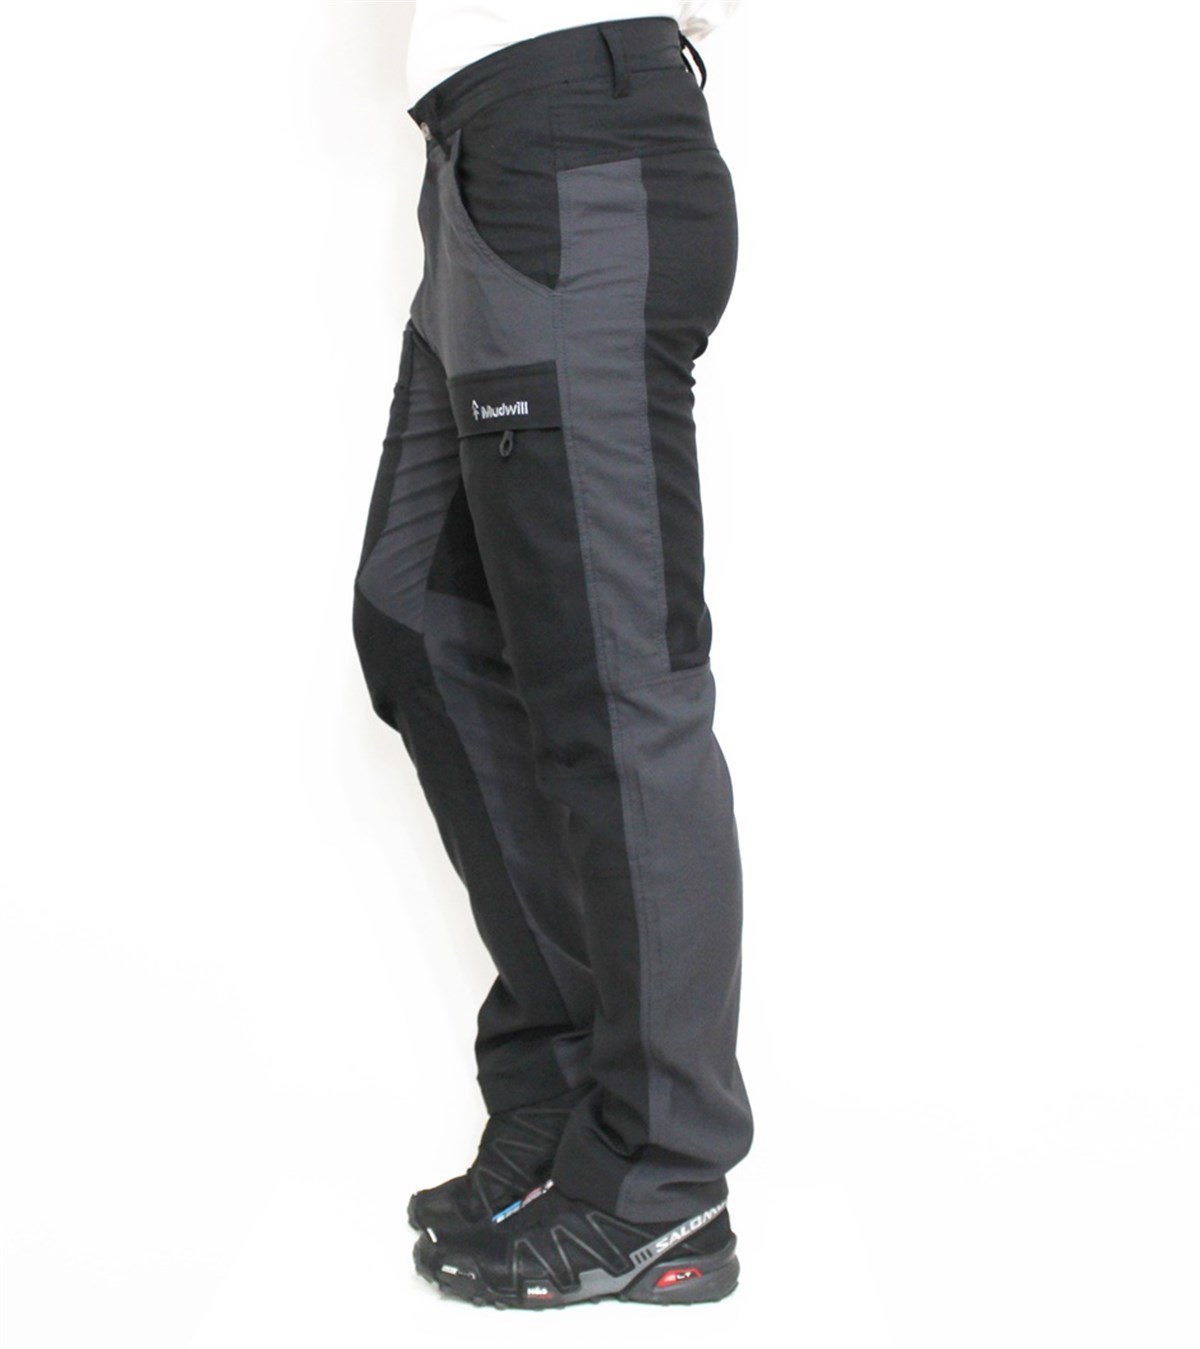 Mudwill Adventurous Yazlık Quickdry Pantolon Gri-Siyah